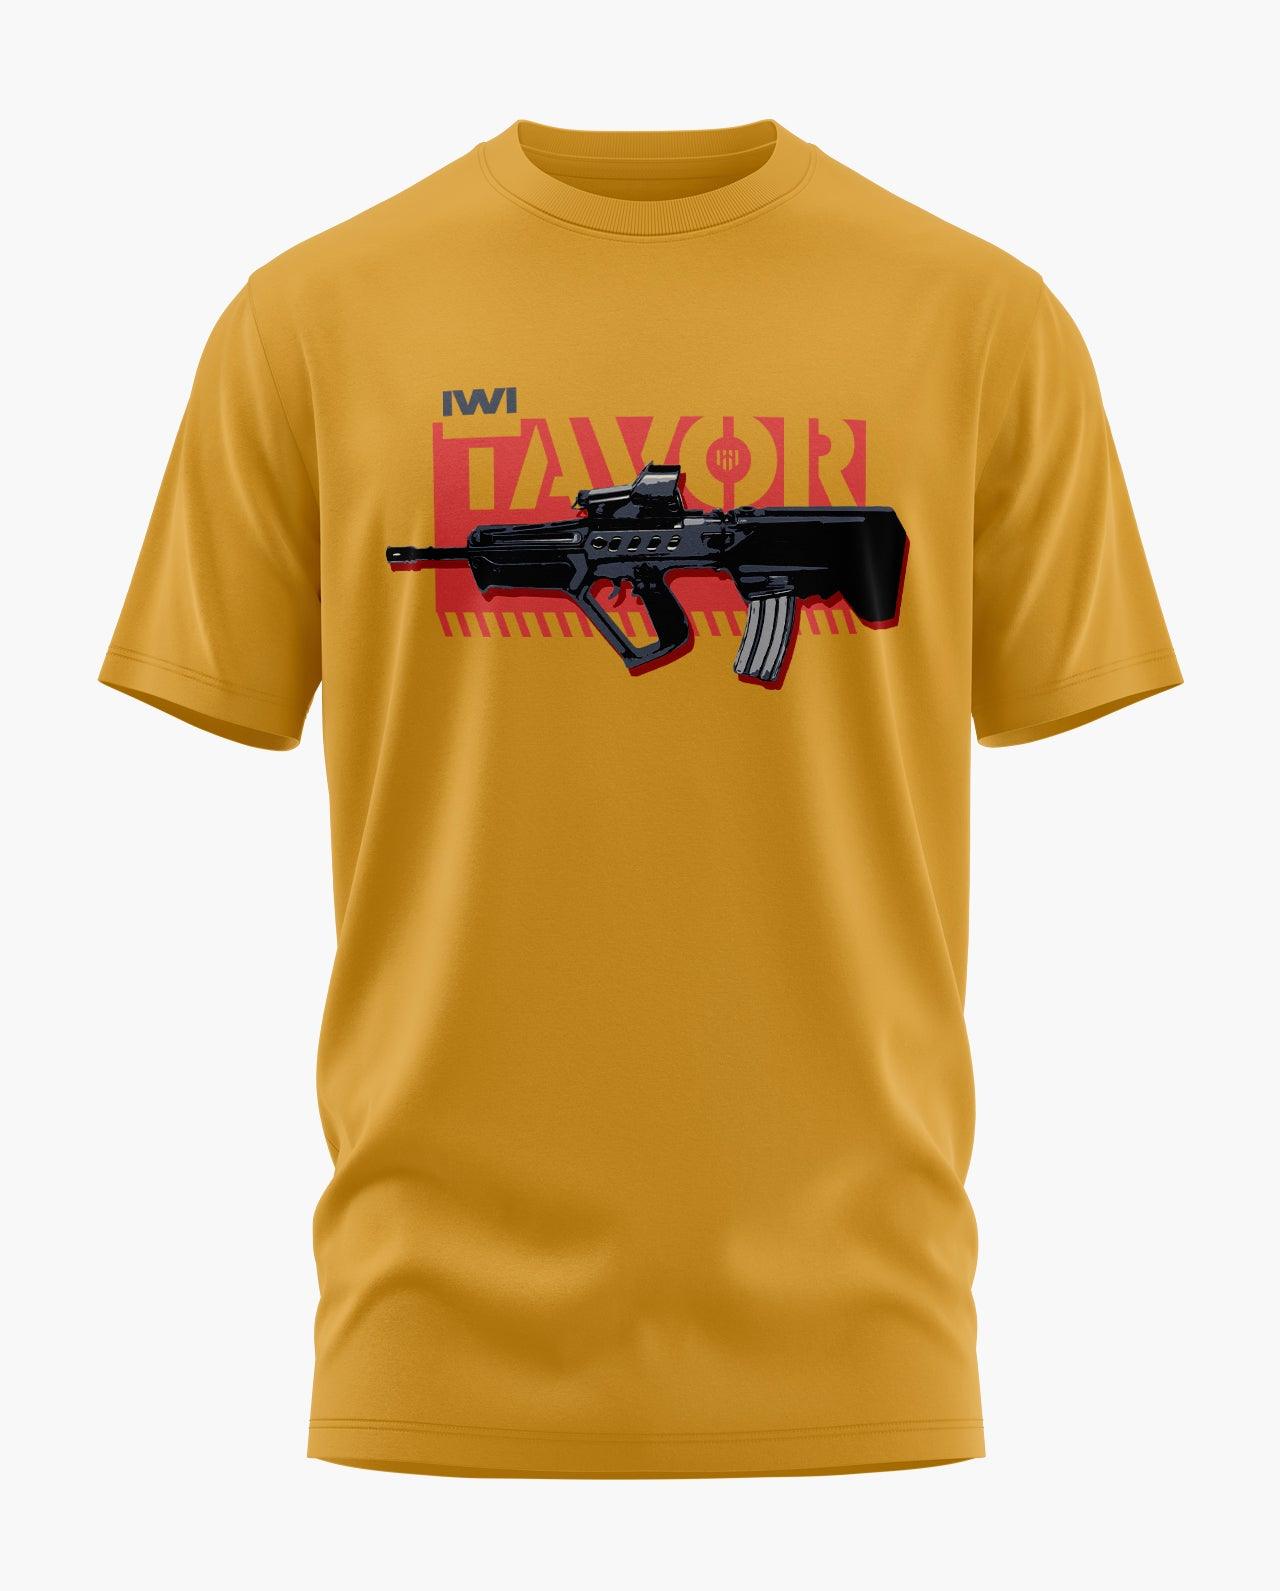 IWI Tavor T-Shirt - Aero Armour